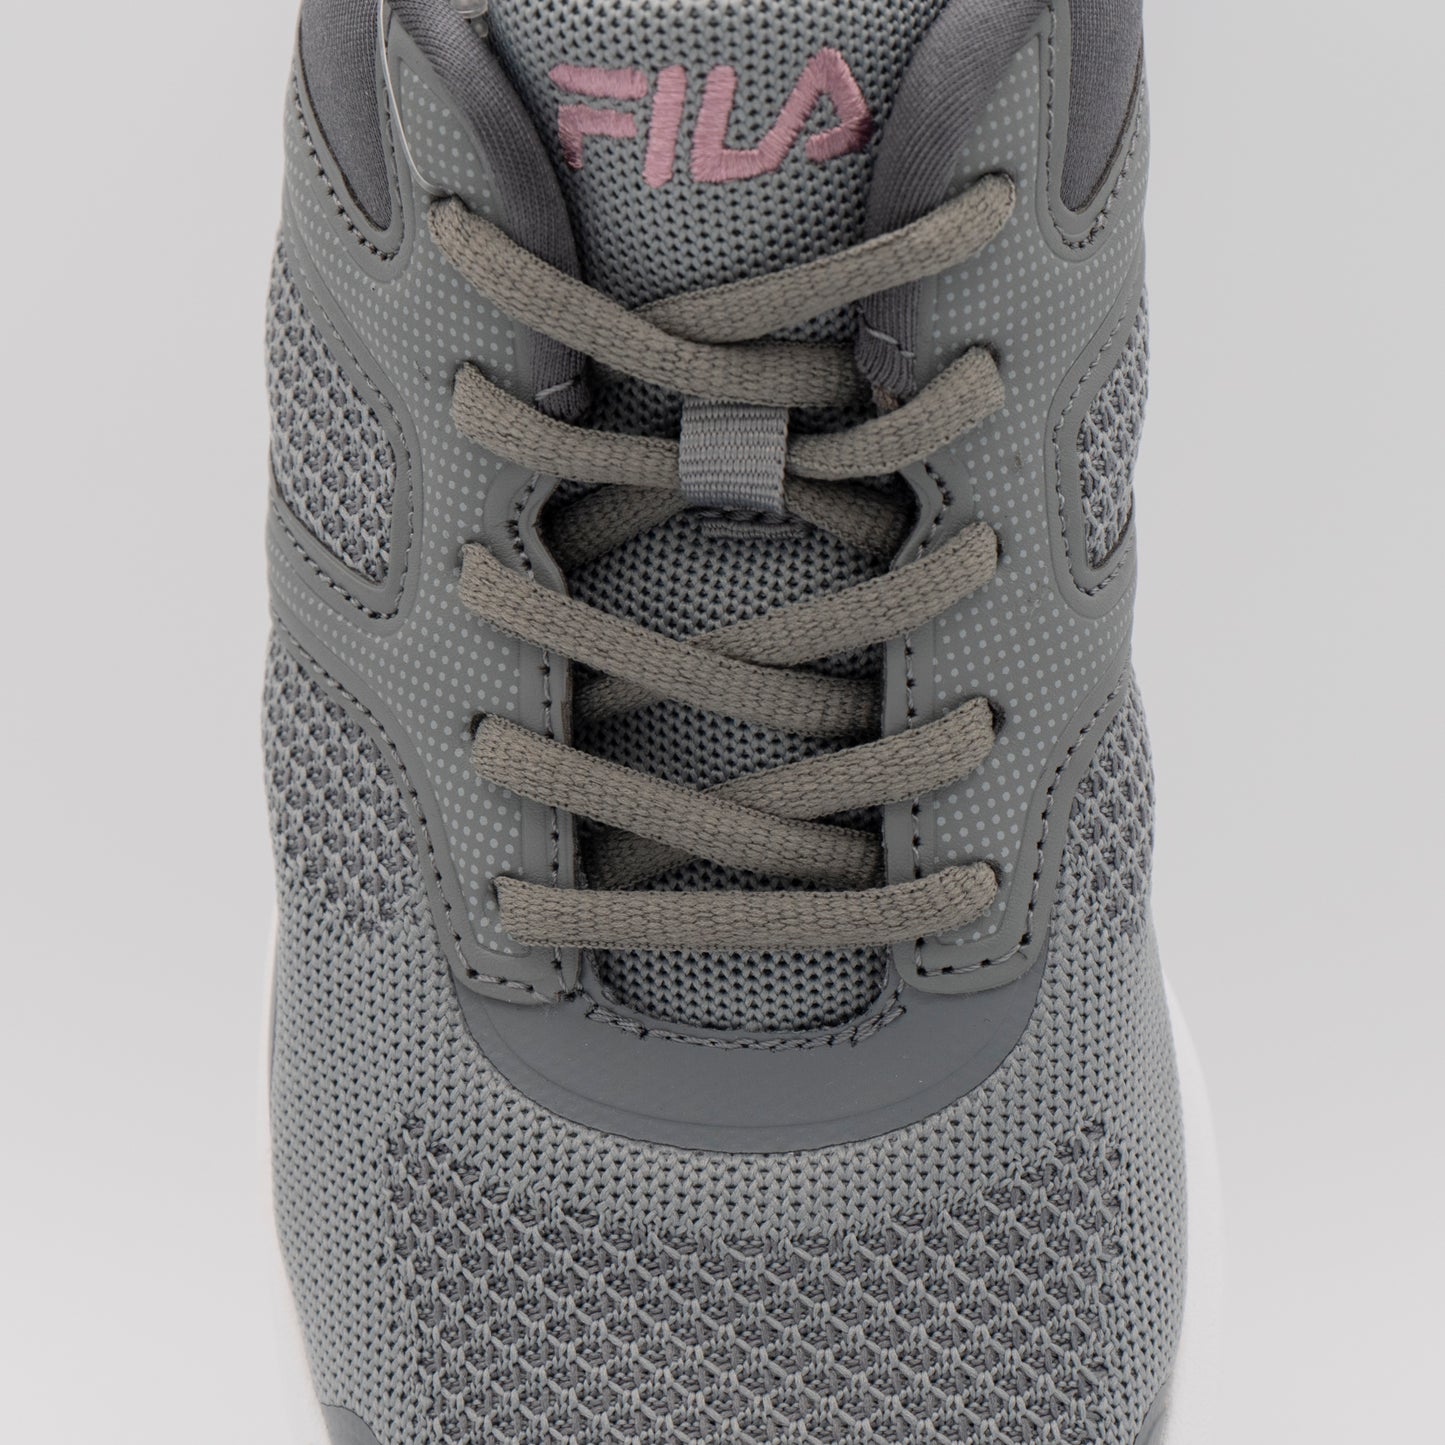 Fila - Memory Foam Frame V6 Athletic Running Shoes - Grey Purple